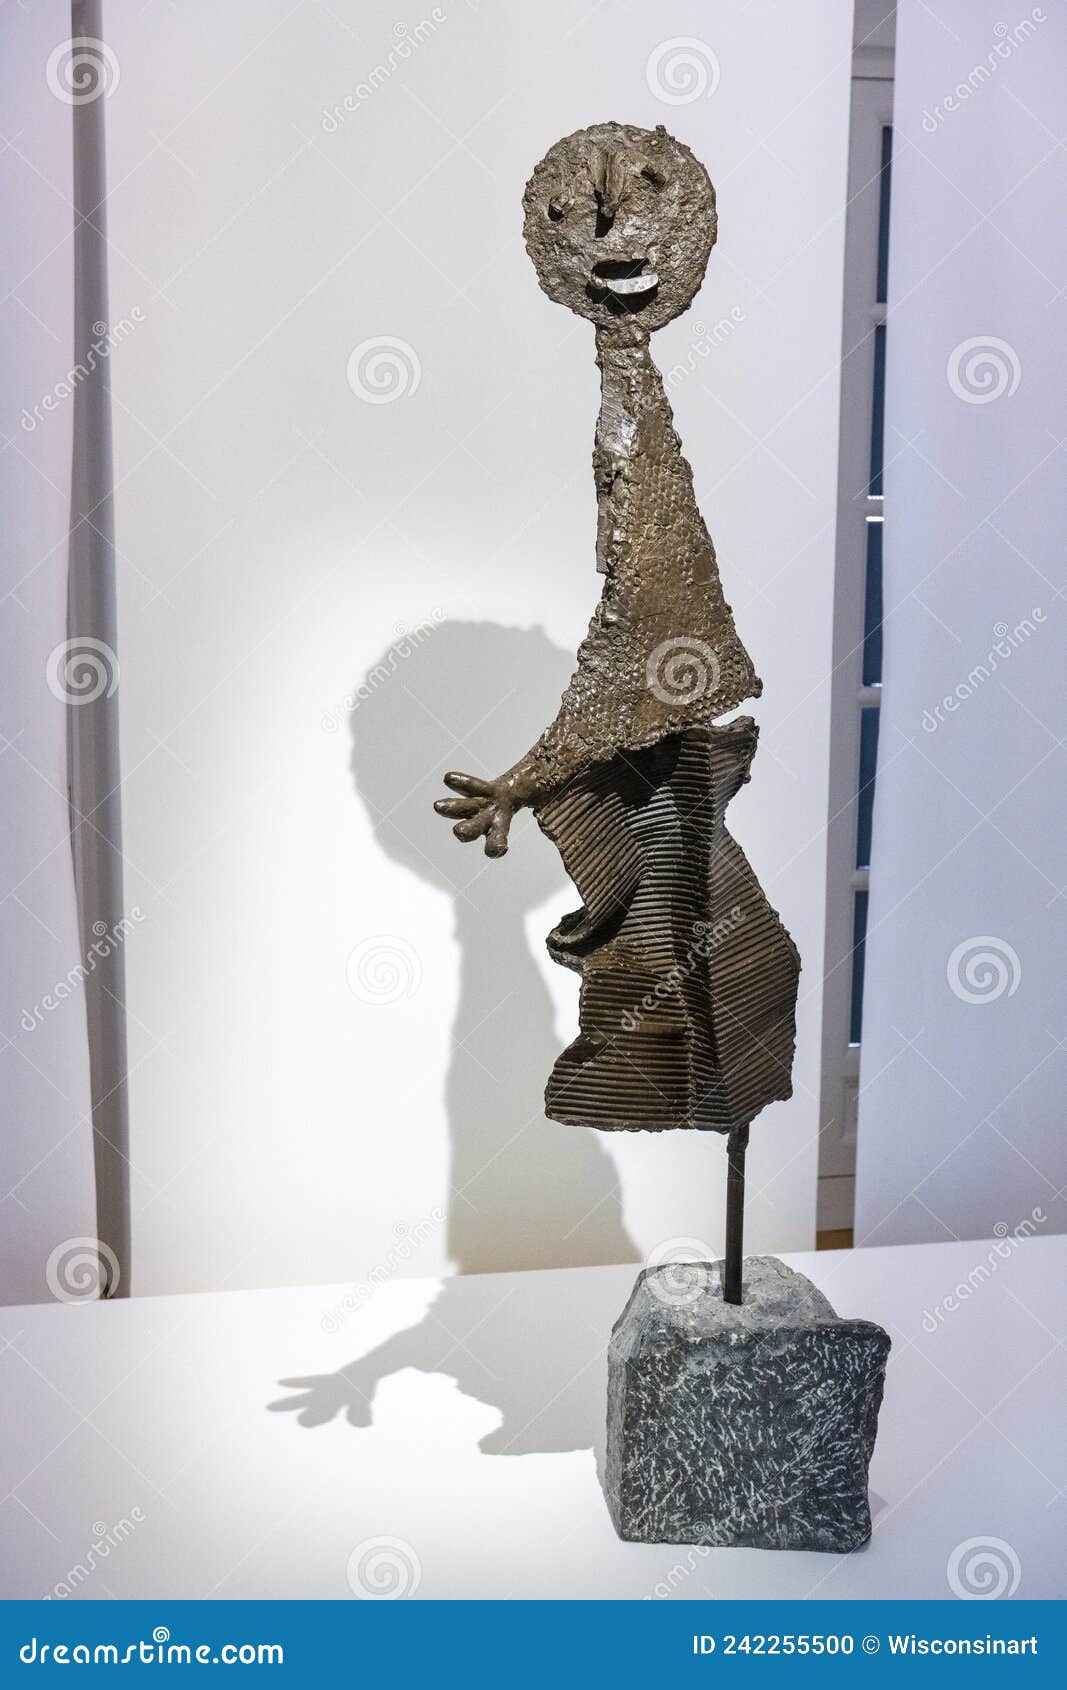 Pablo Picasso Statue, Art Work, Sculpture Editorial Image - Image